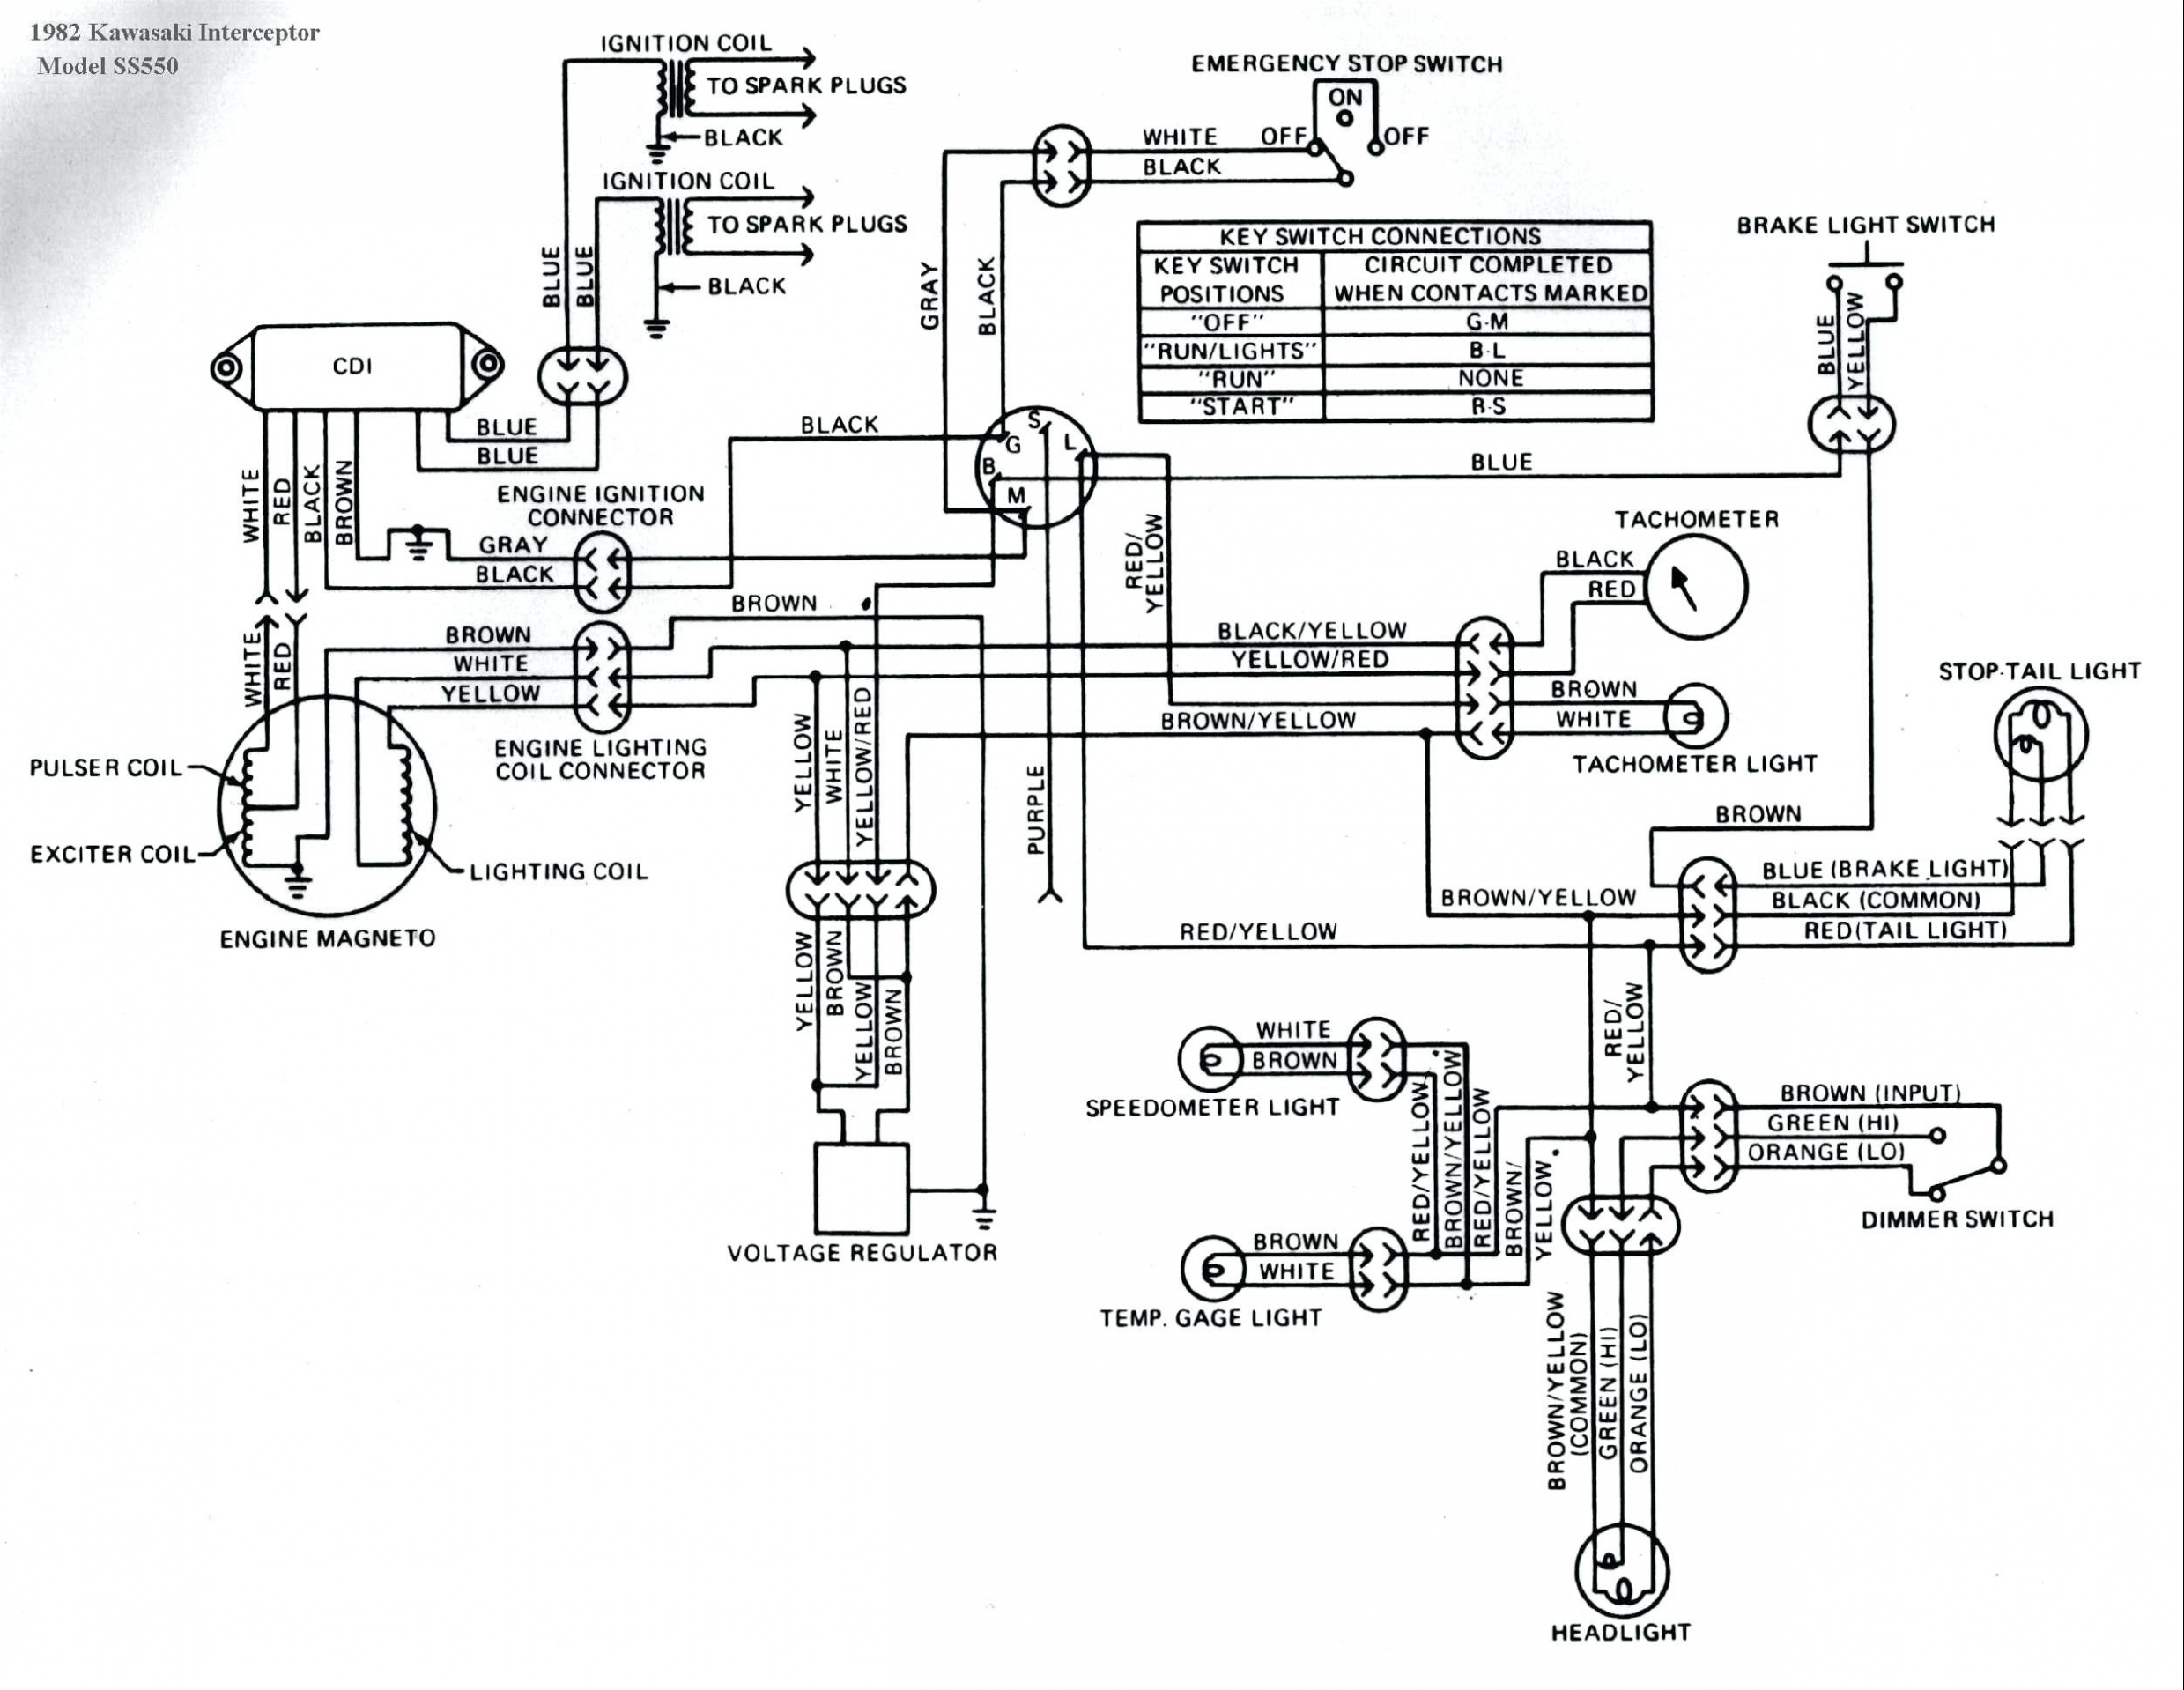 110 Wiring Diagram | Wiring Library - 220 To 110 Wiring Diagram